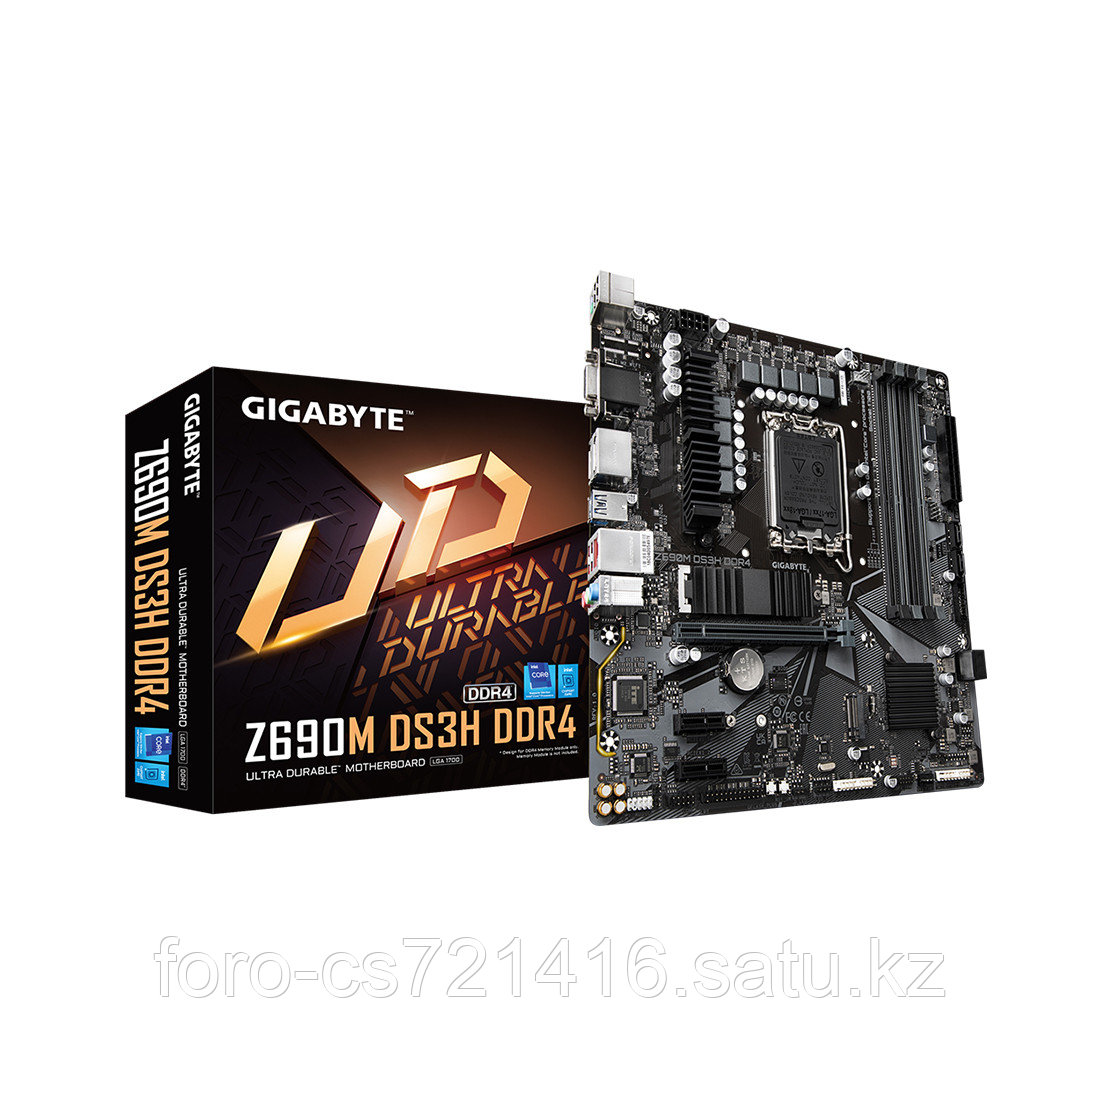 Материнская плата Gigabyte Z690M DS3H DDR4, фото 1